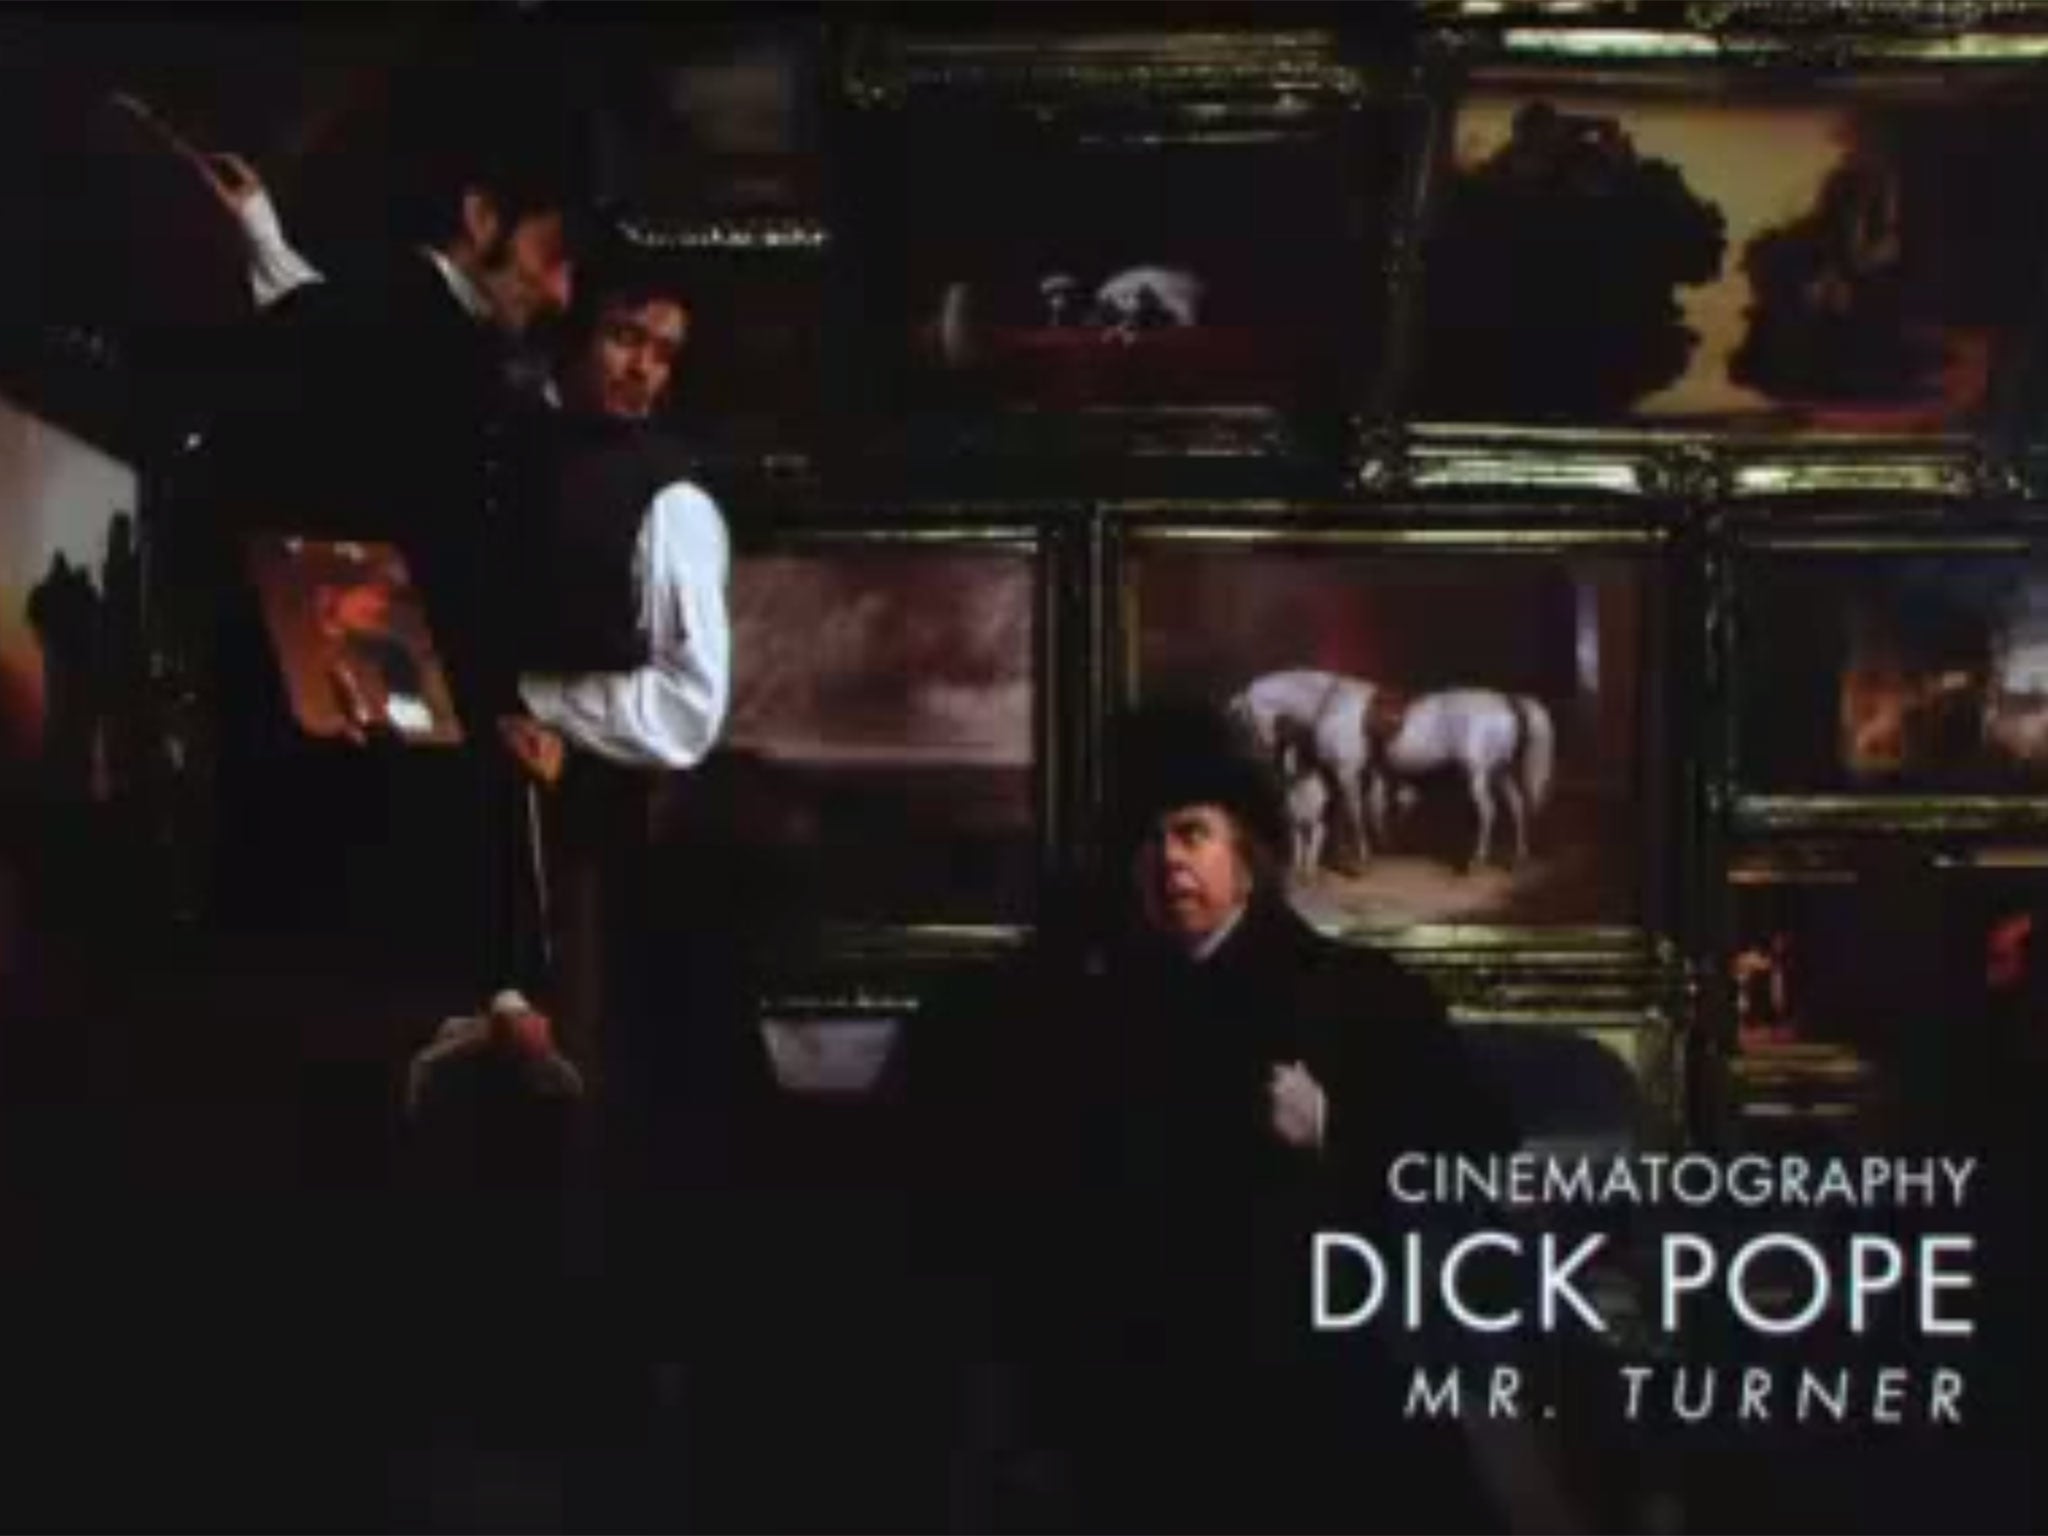 Cheryl Boone Isaacs mispronounces Dick Pope's name as 'Dick Poop'